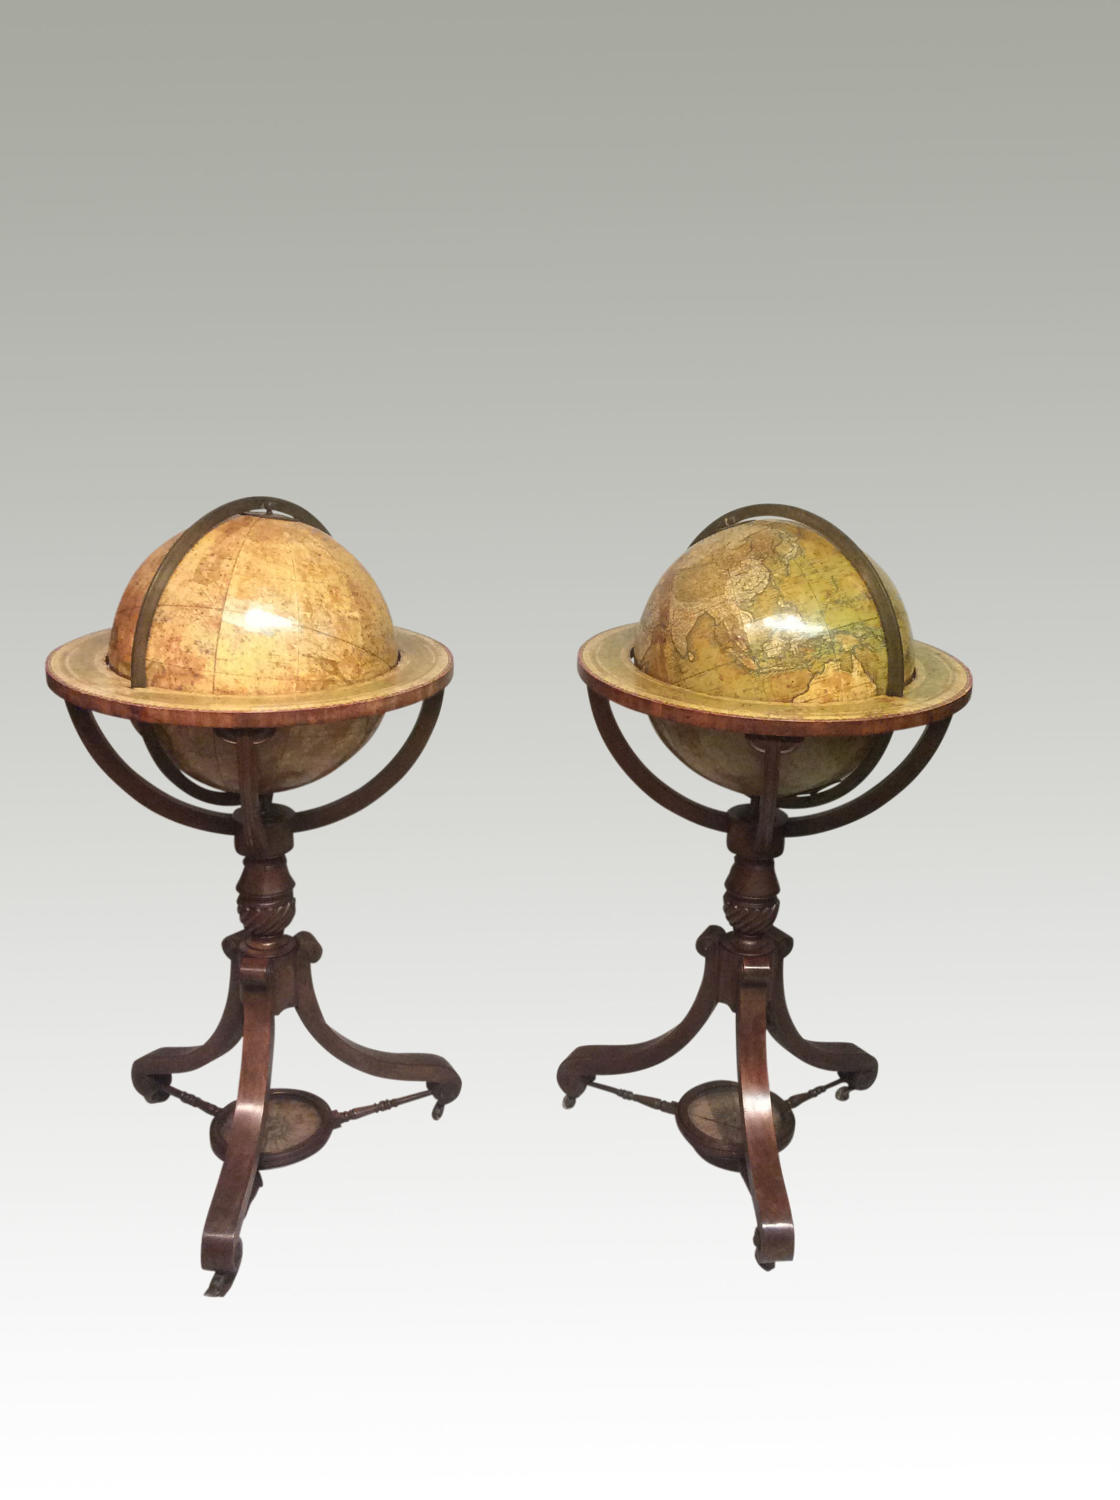 A pair of antique Georgian globes by Newton.